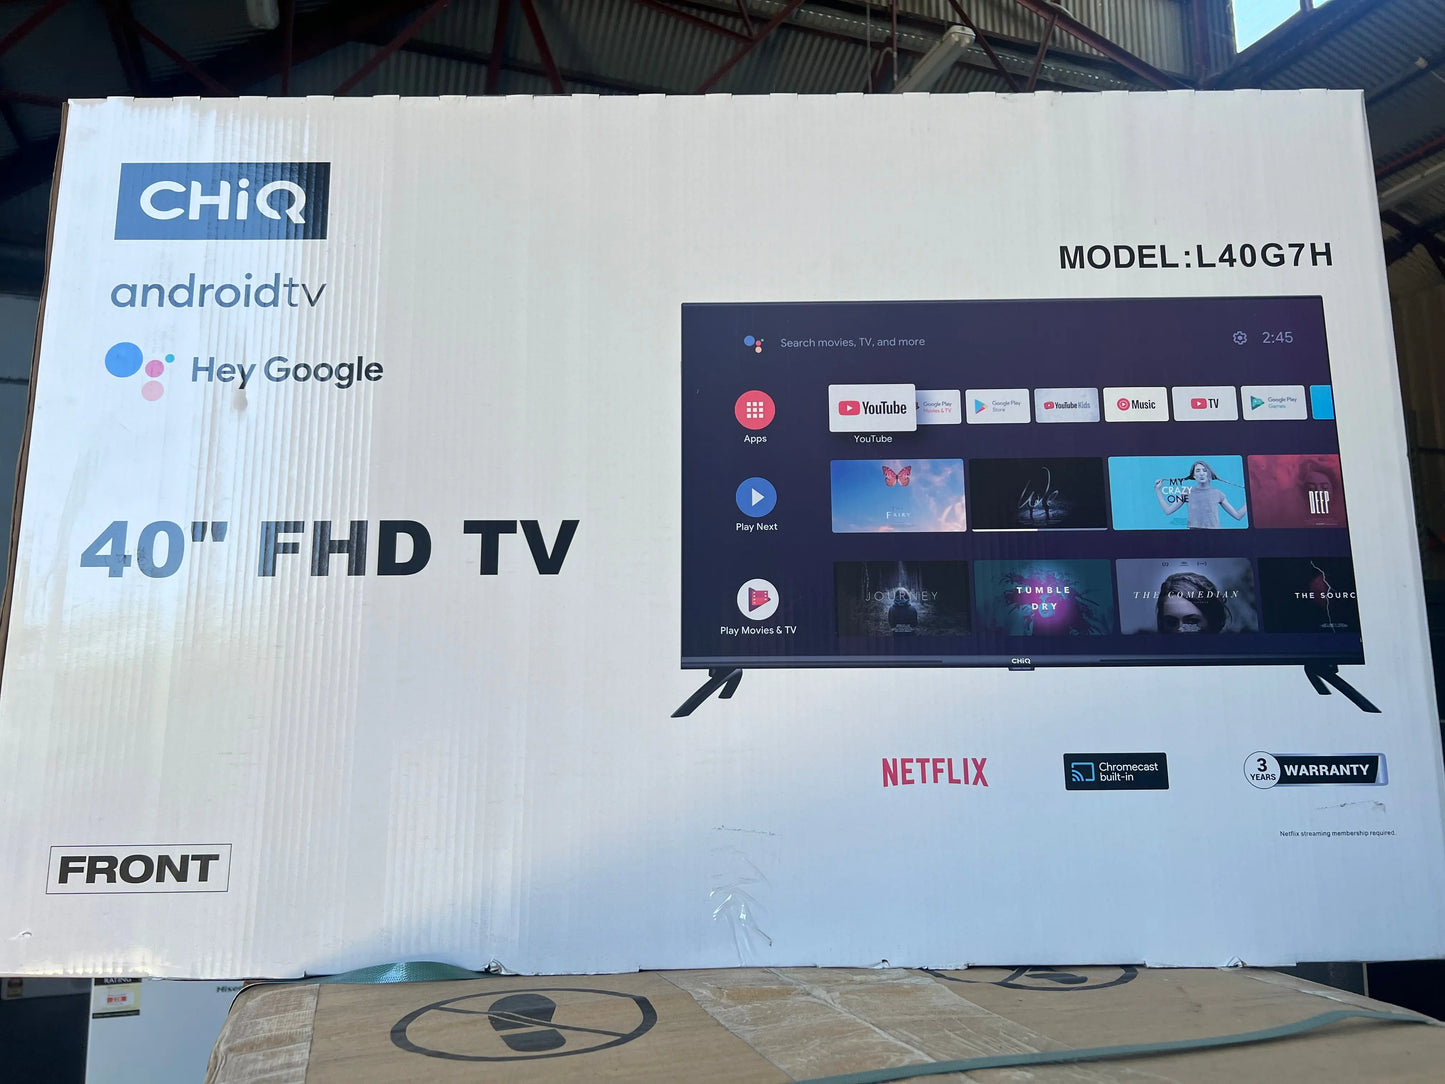 Chiq 40 inch fhd smart tv | ADELAIDE